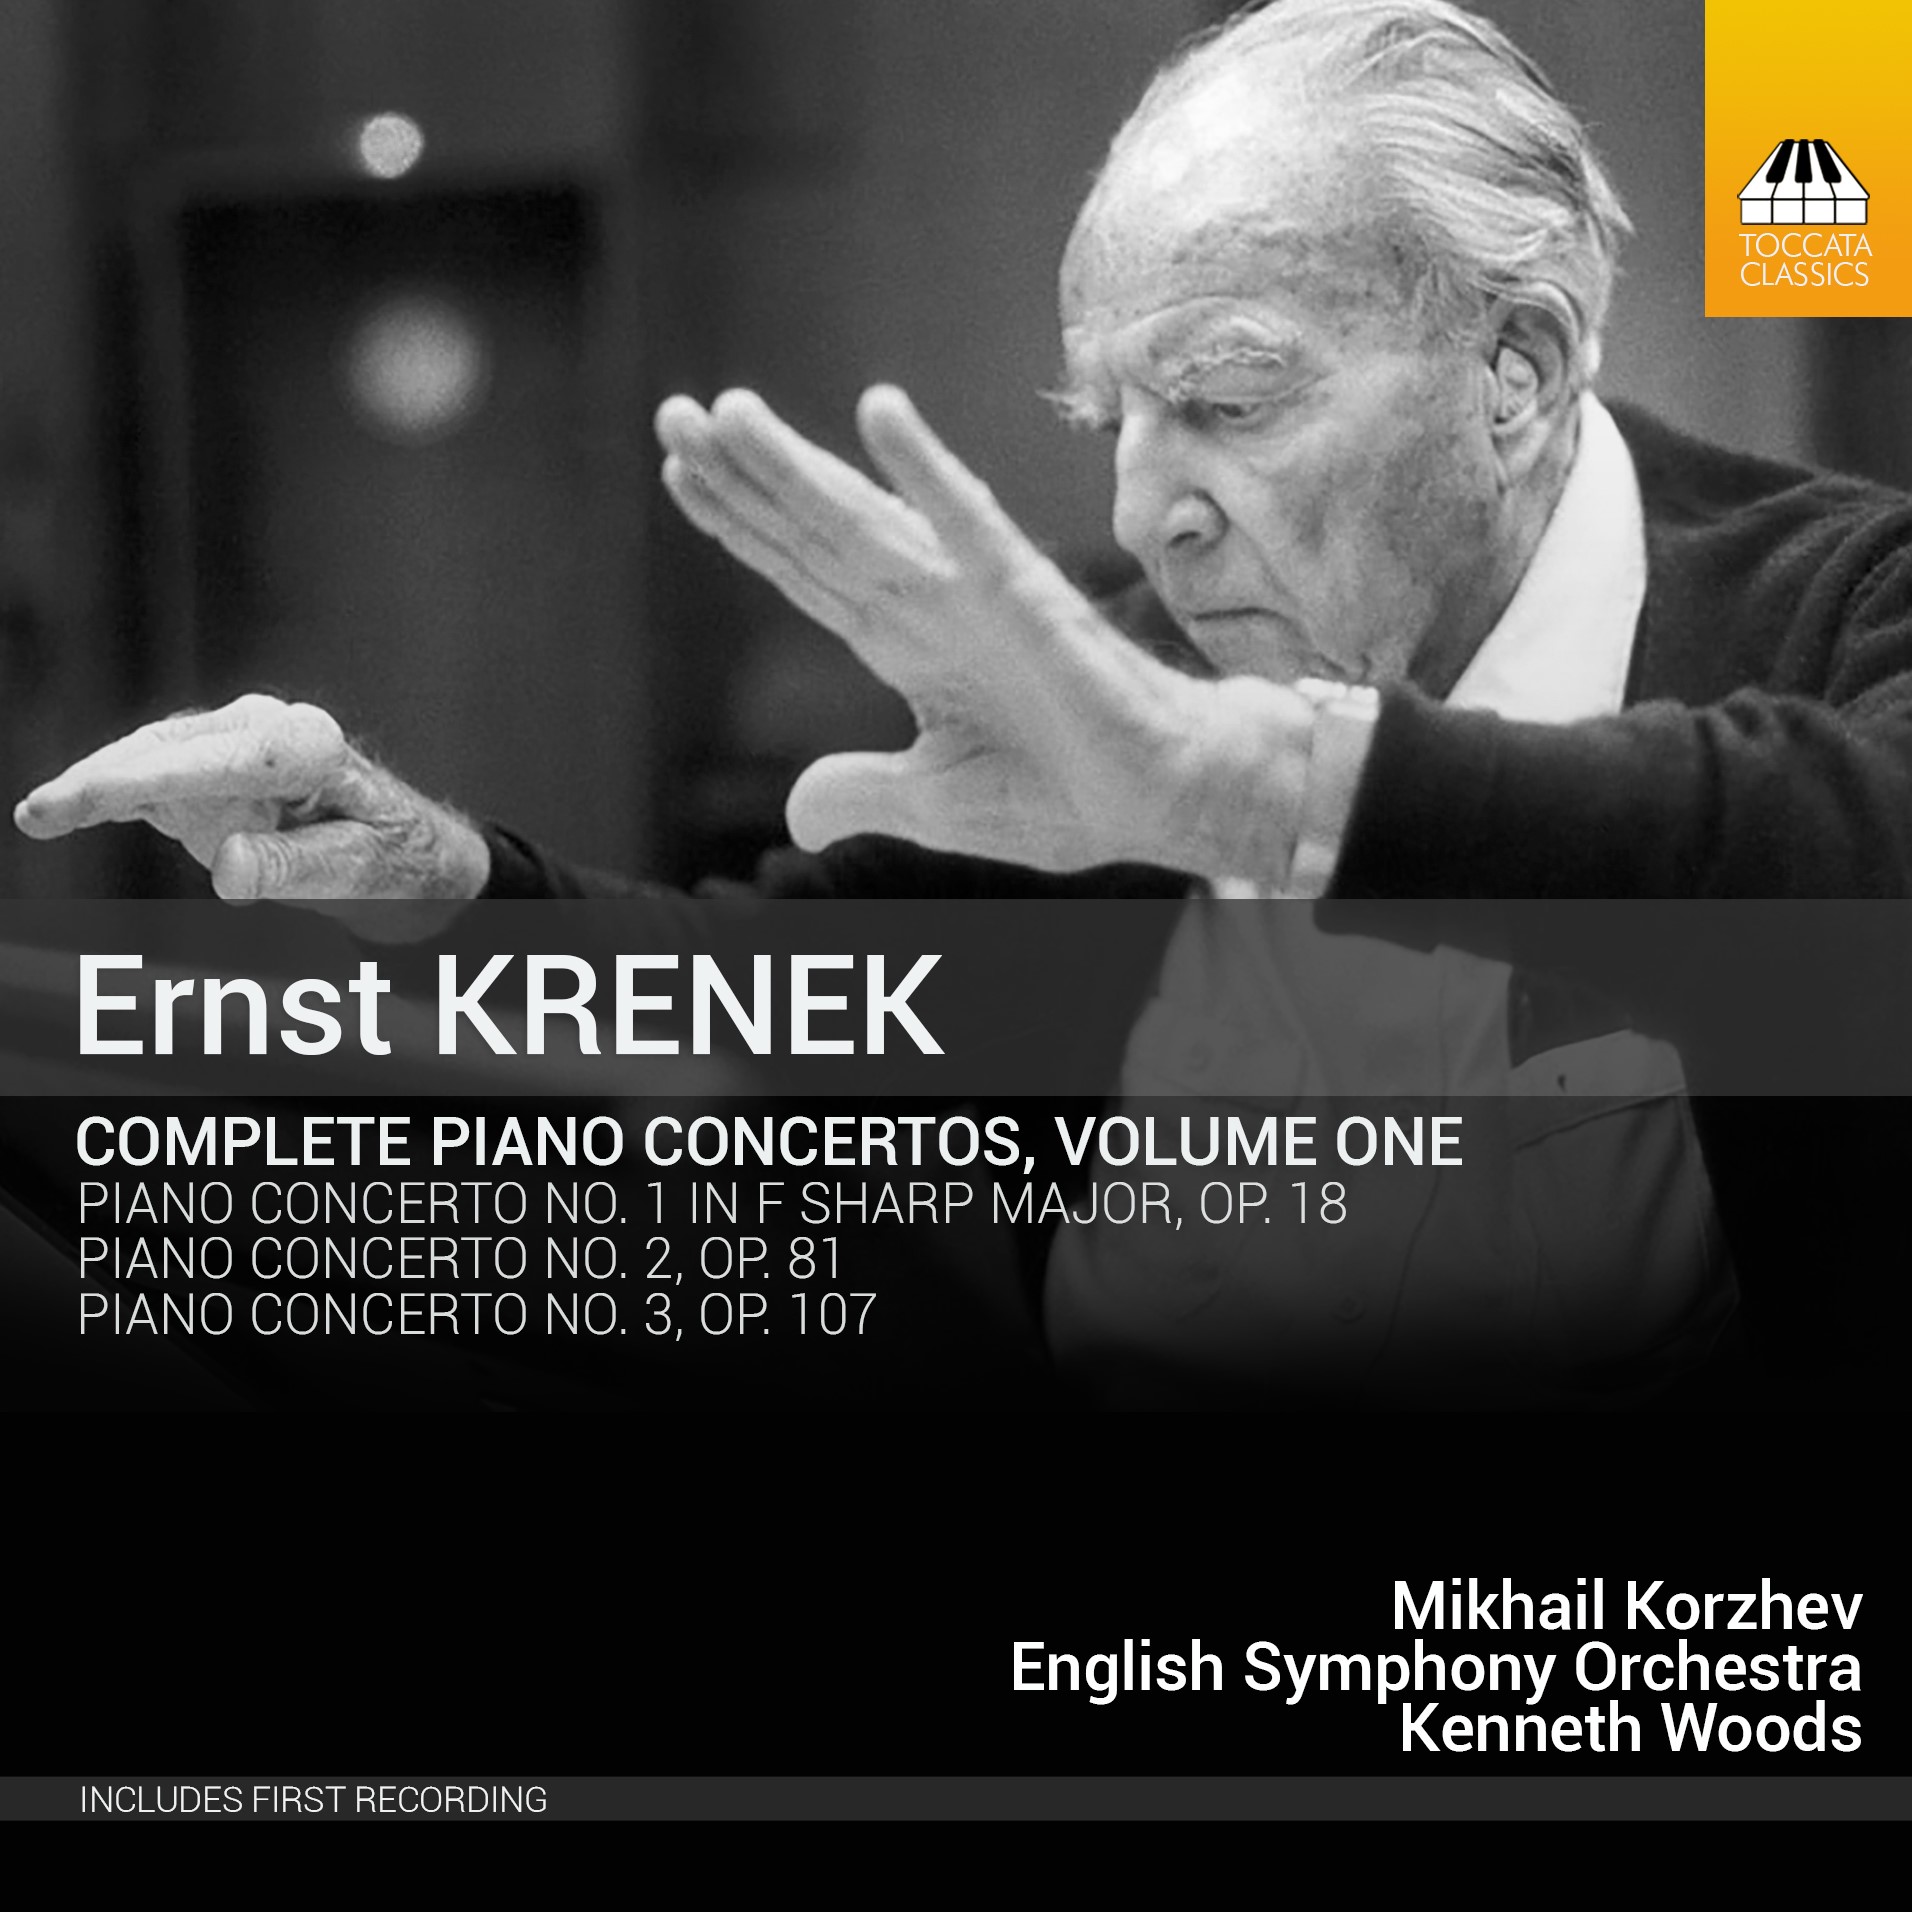 Musical Opinion on ESO/Korzhev/Woods Krenek Piano Concerti